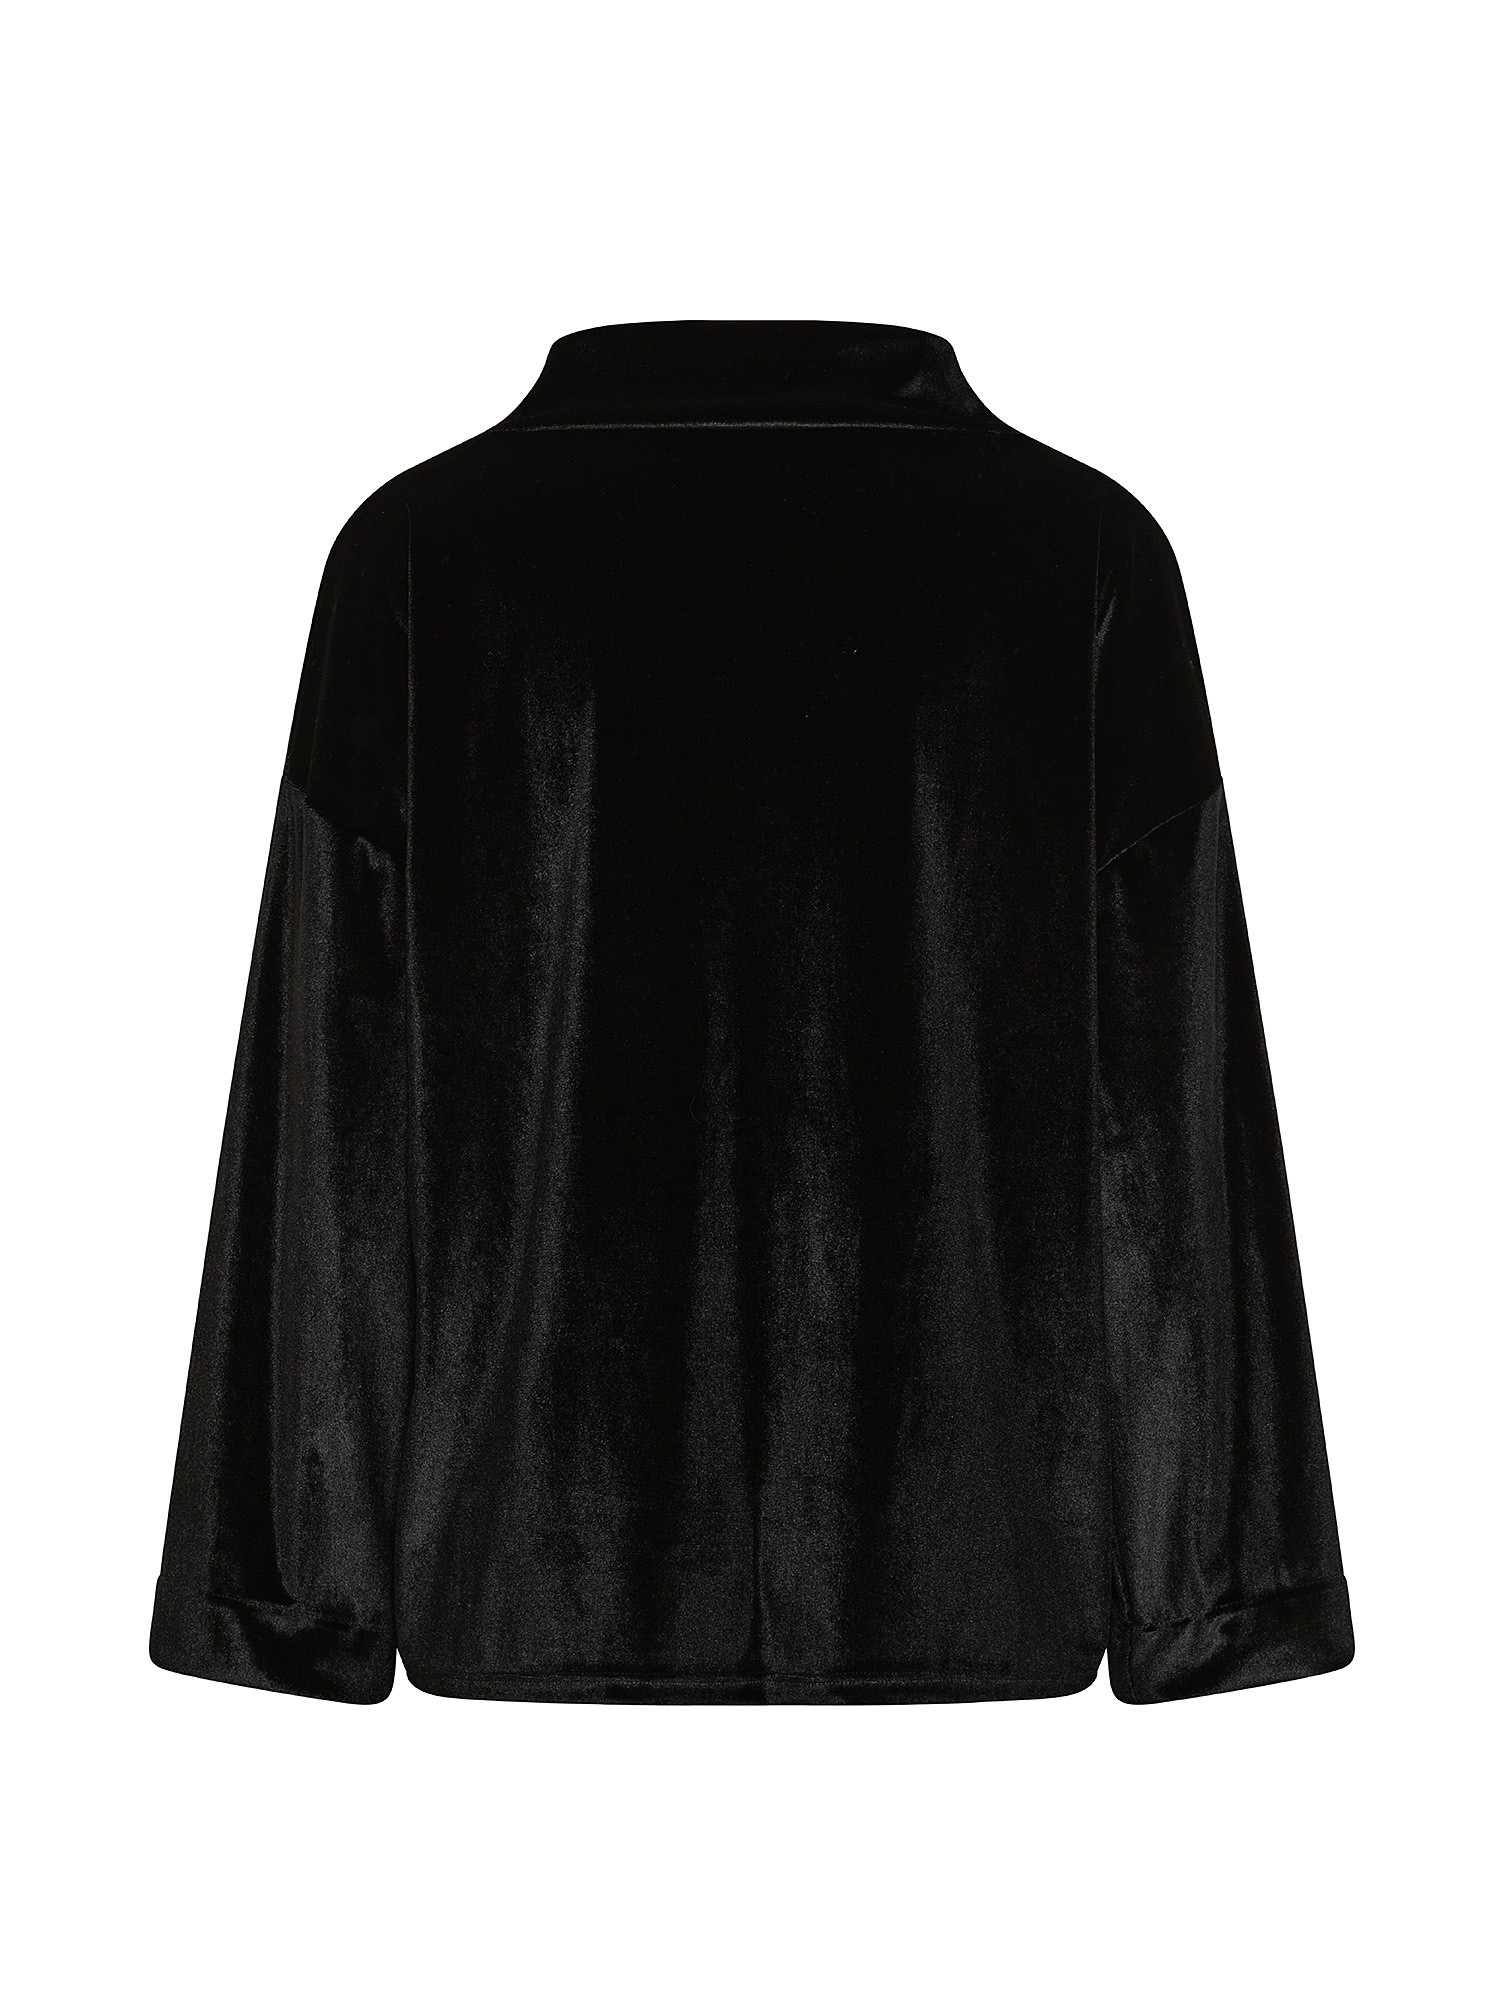 Chenille tunic, Black, large image number 1